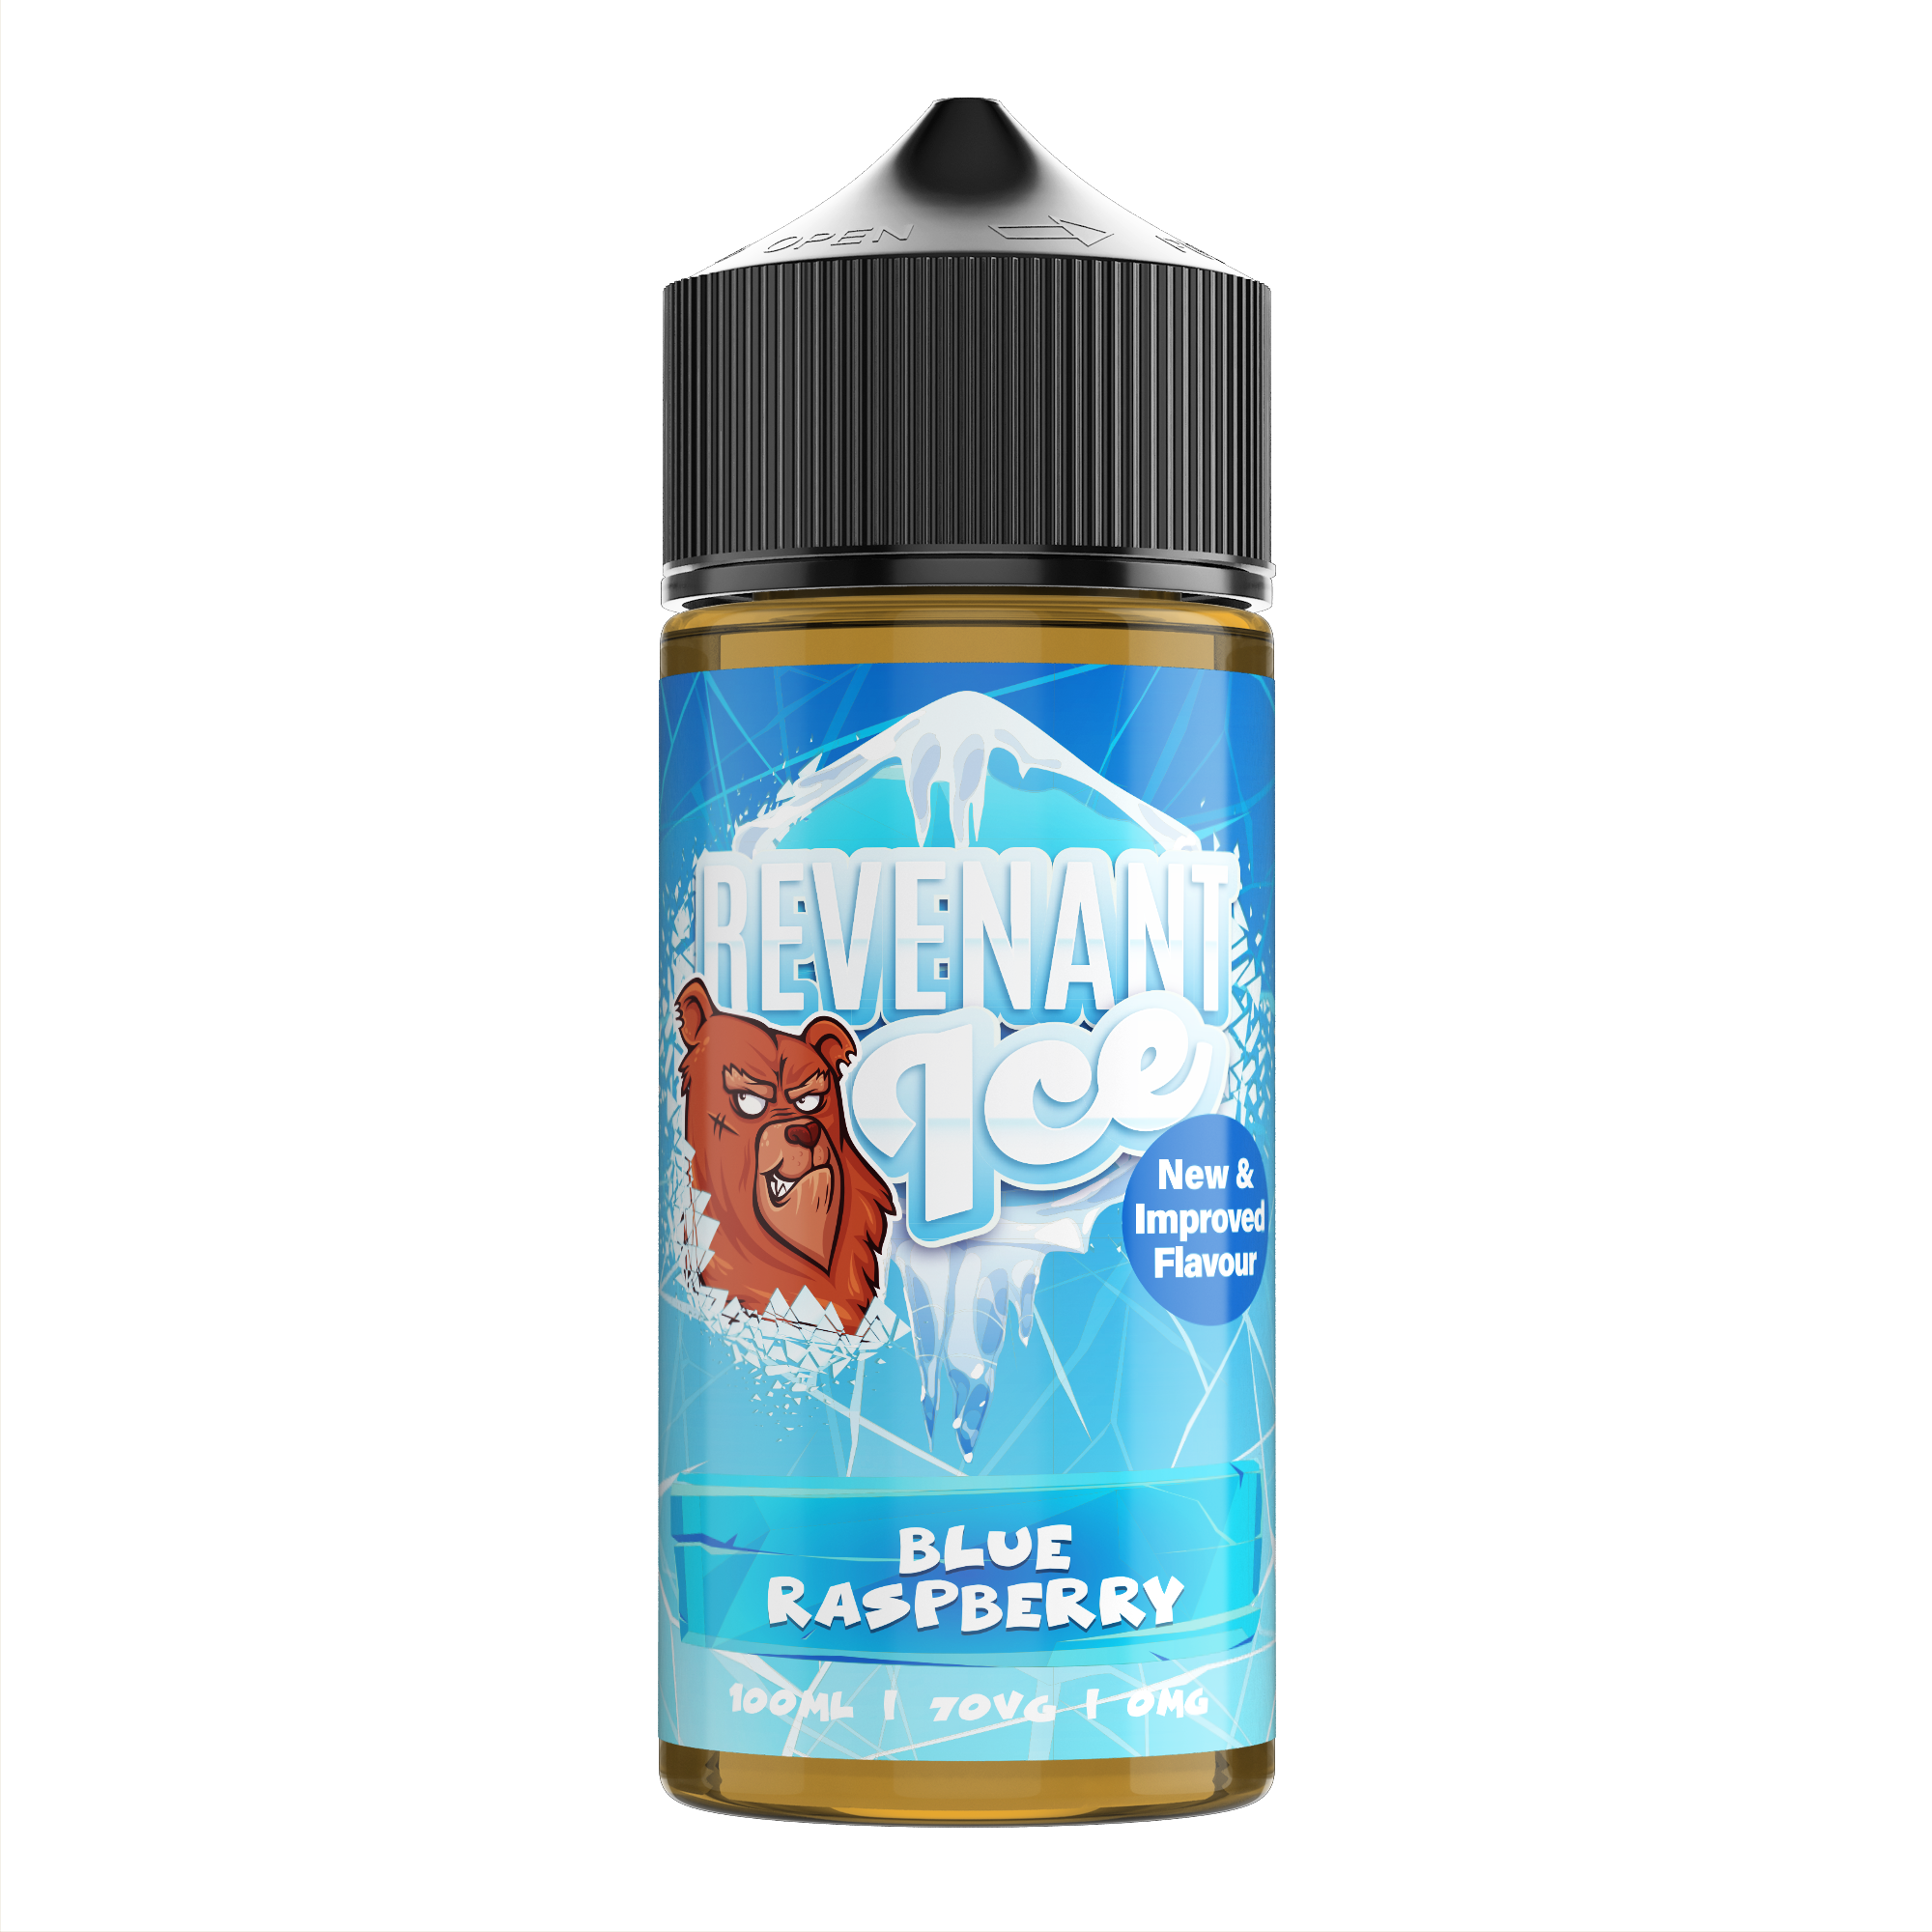 Blue Raspberry Ice 100ml Shortfill by Revenant Ice